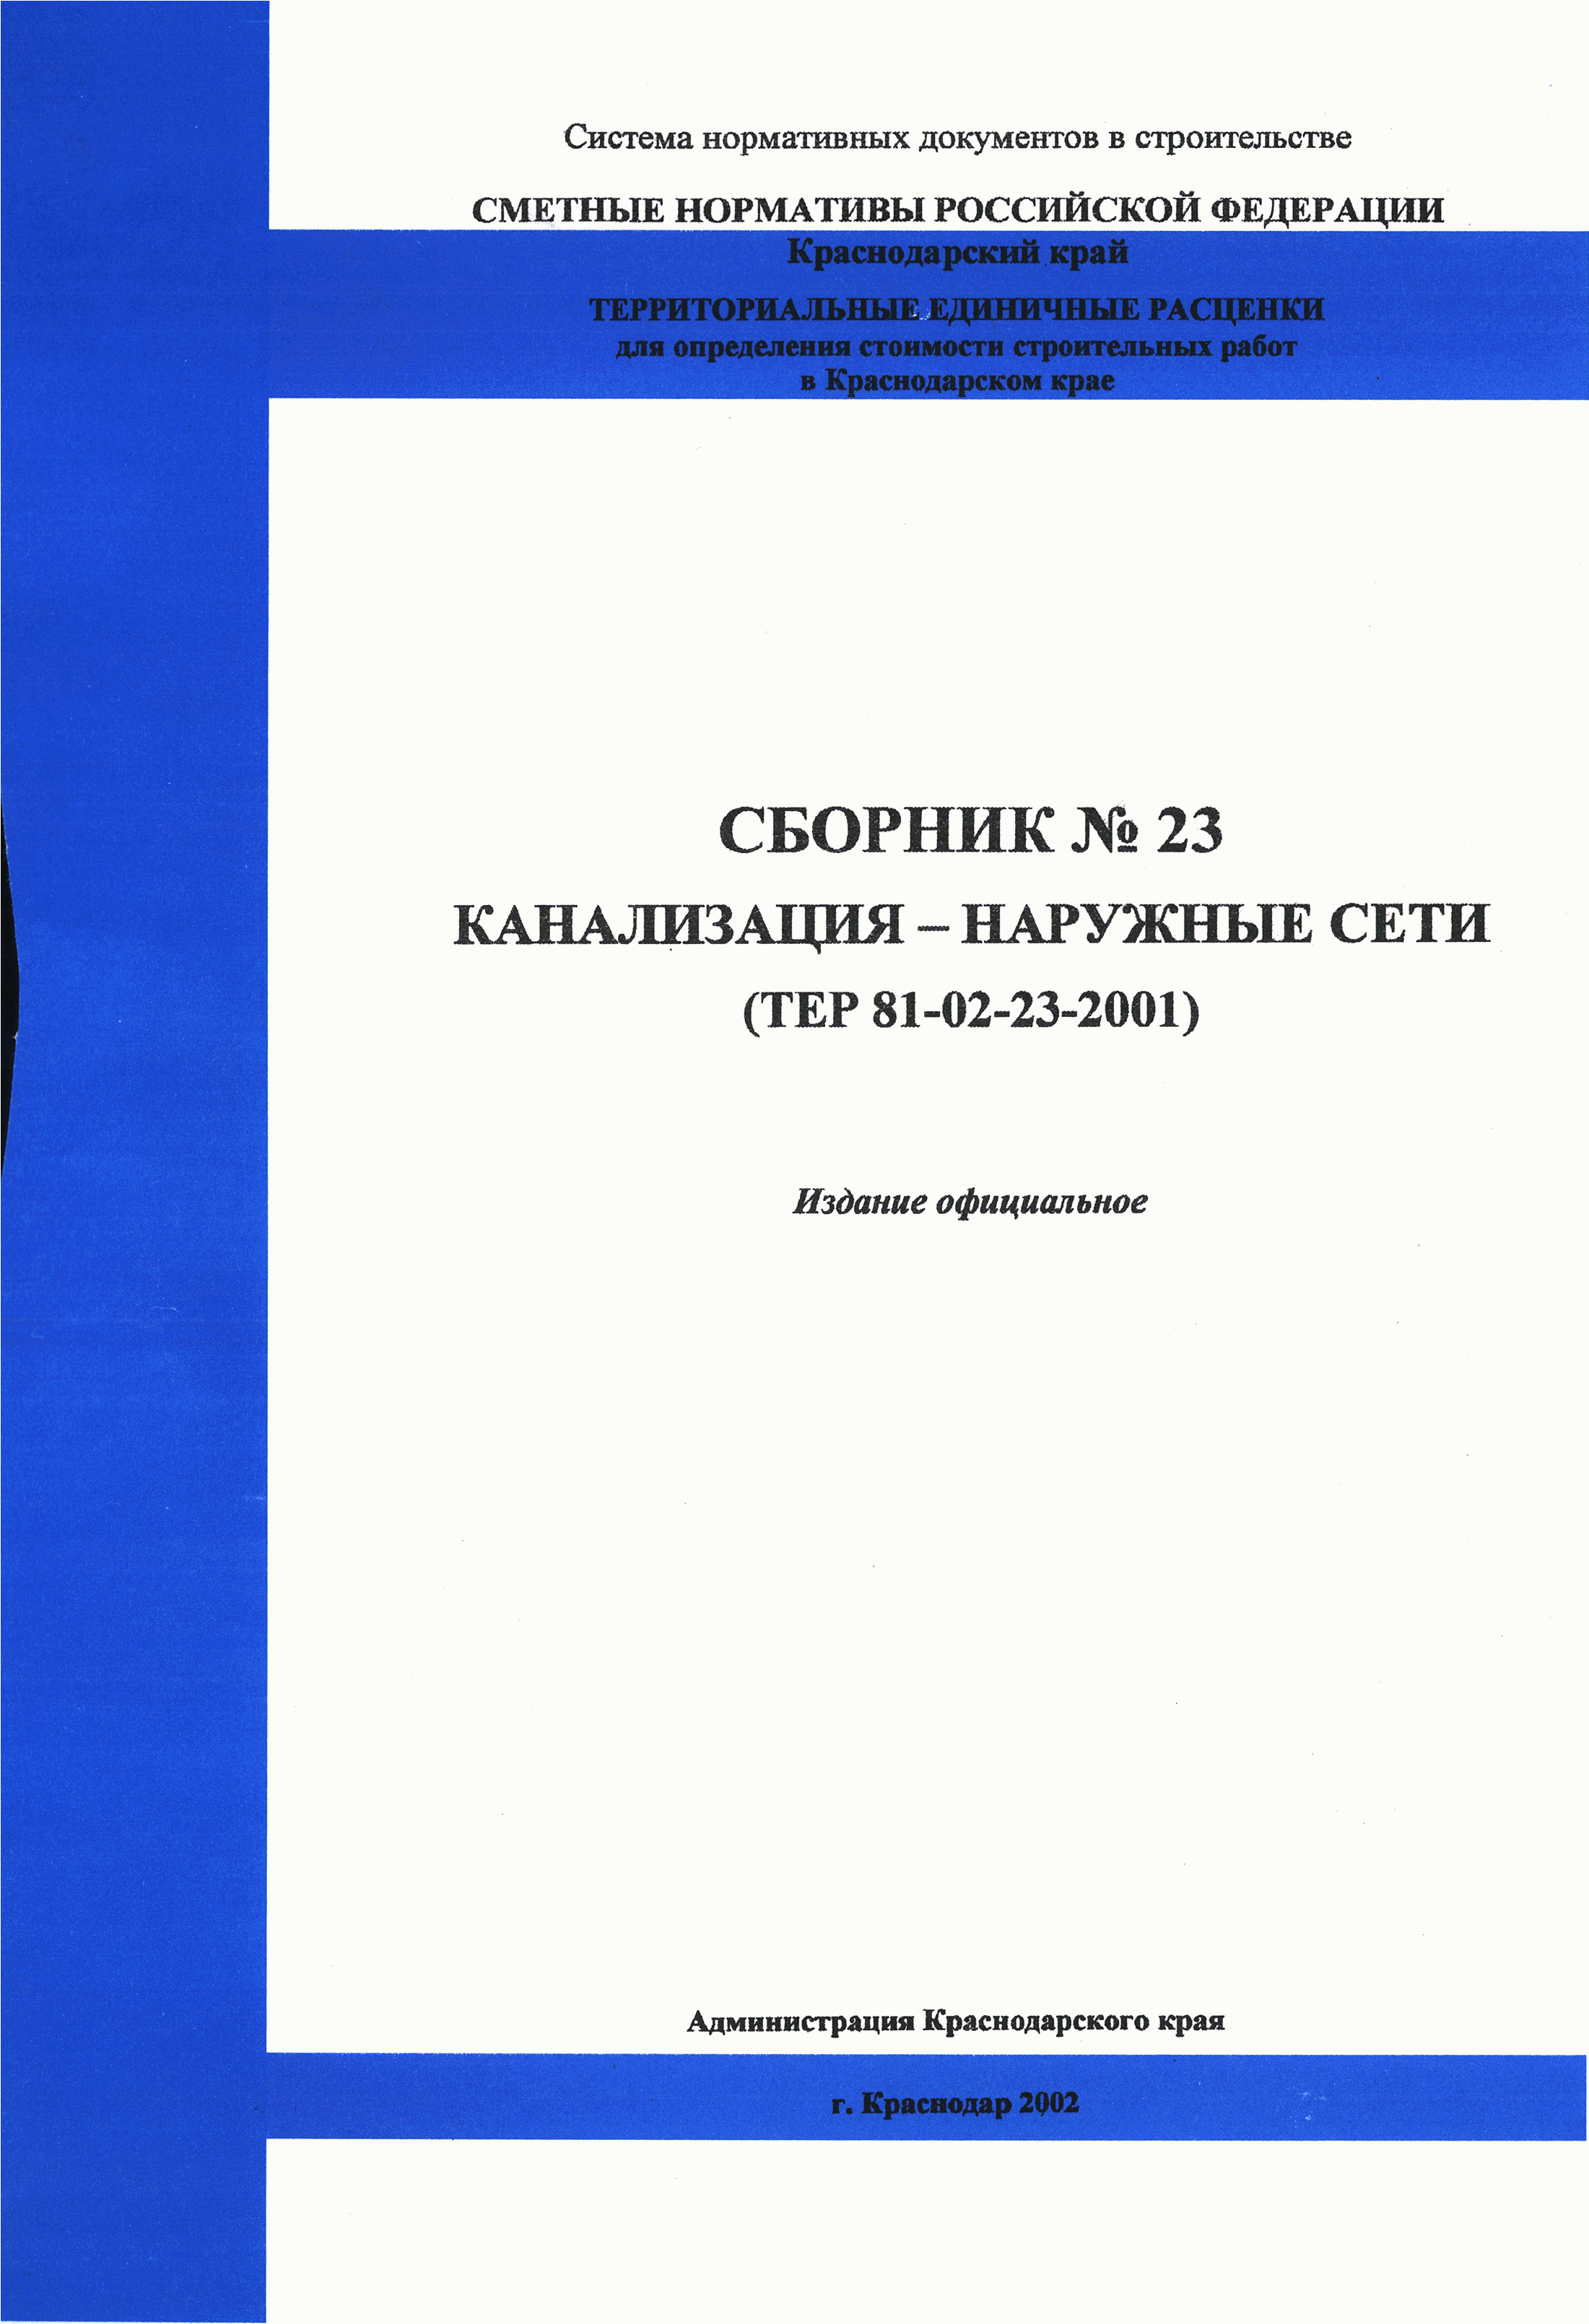 ТЕР Краснодарского края 2001-23